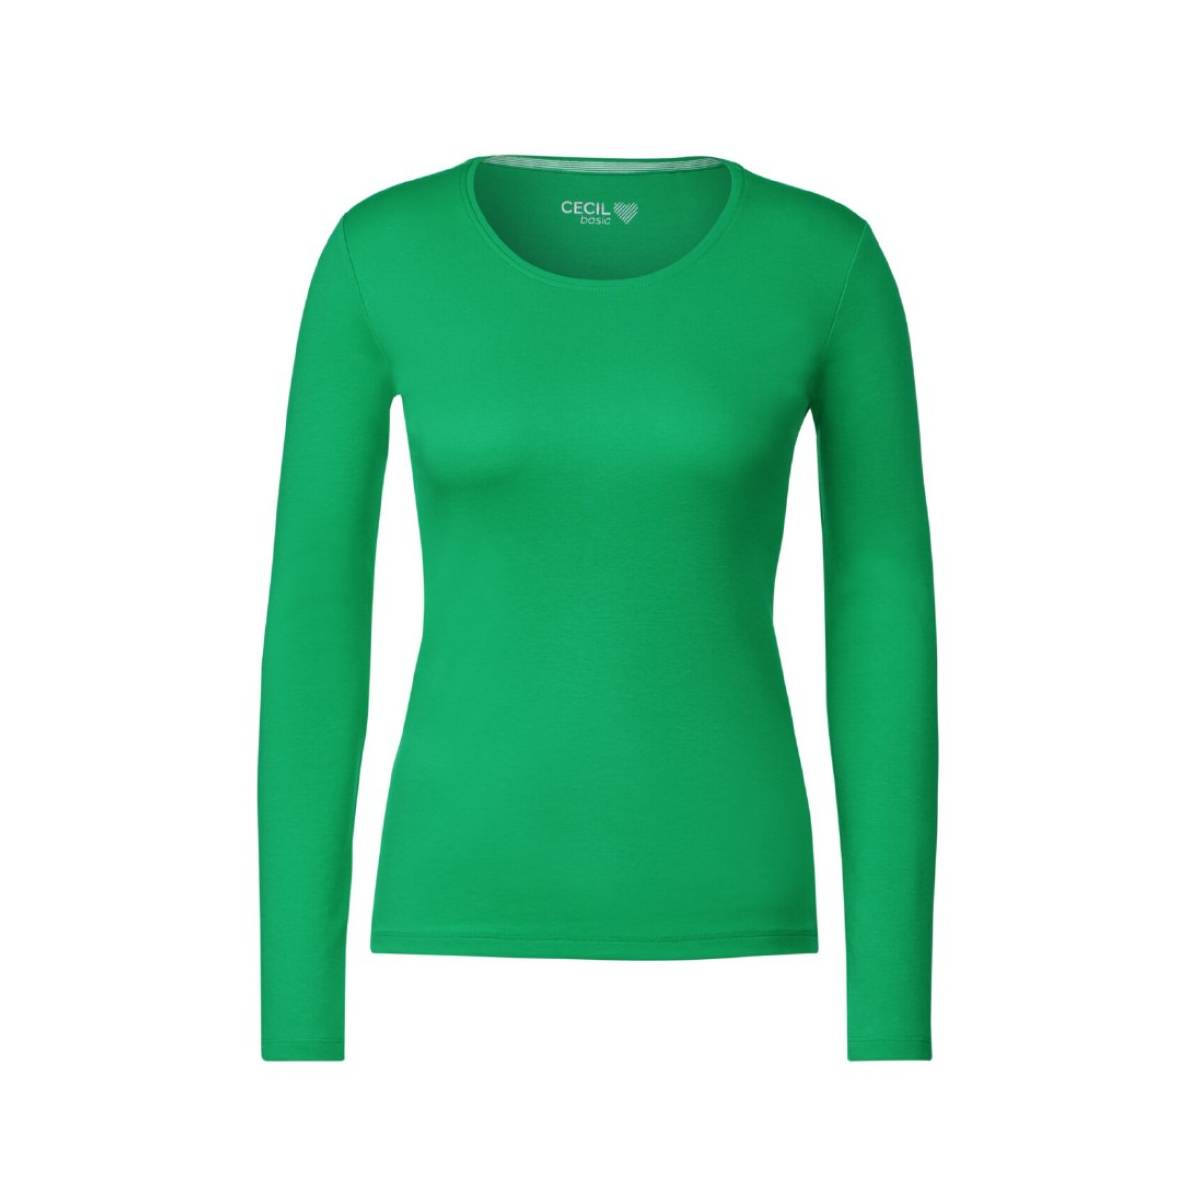 CECIL  t shirts groen -  model b319820 - Dameskleding t shirts groen